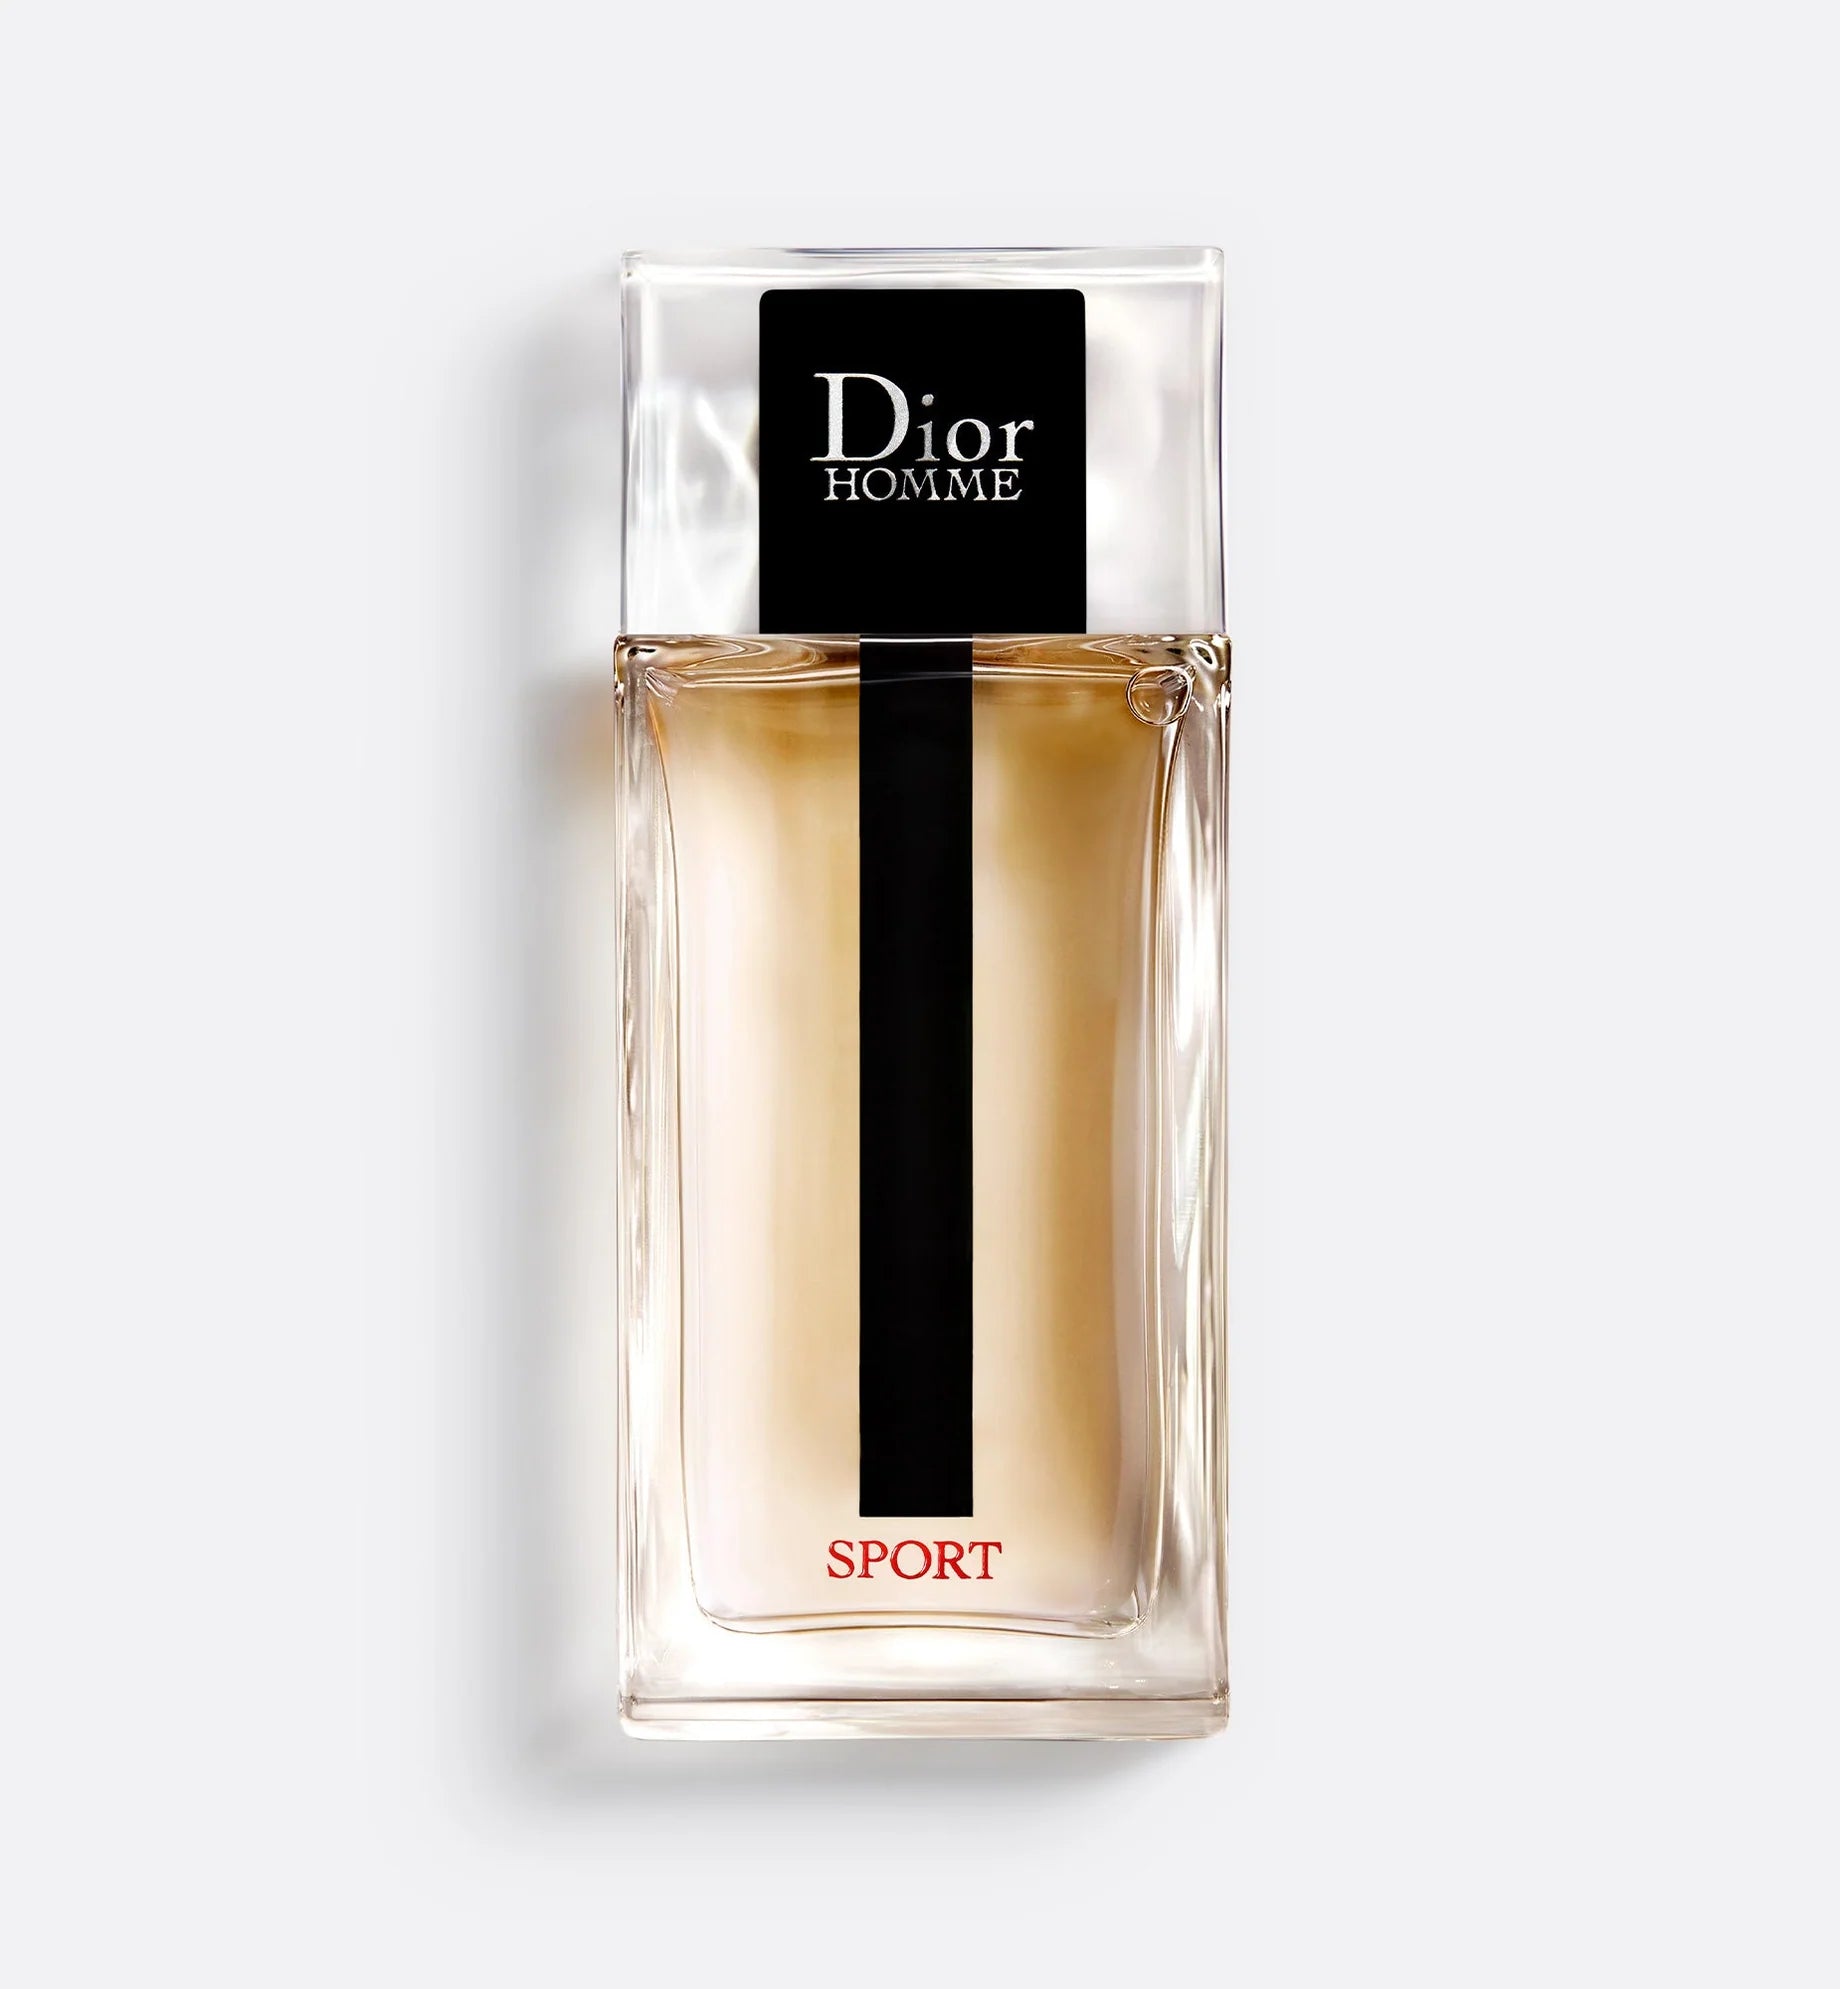 Dior Homme Sport By Christian Dior 2.5 oz For Men EDT Spray